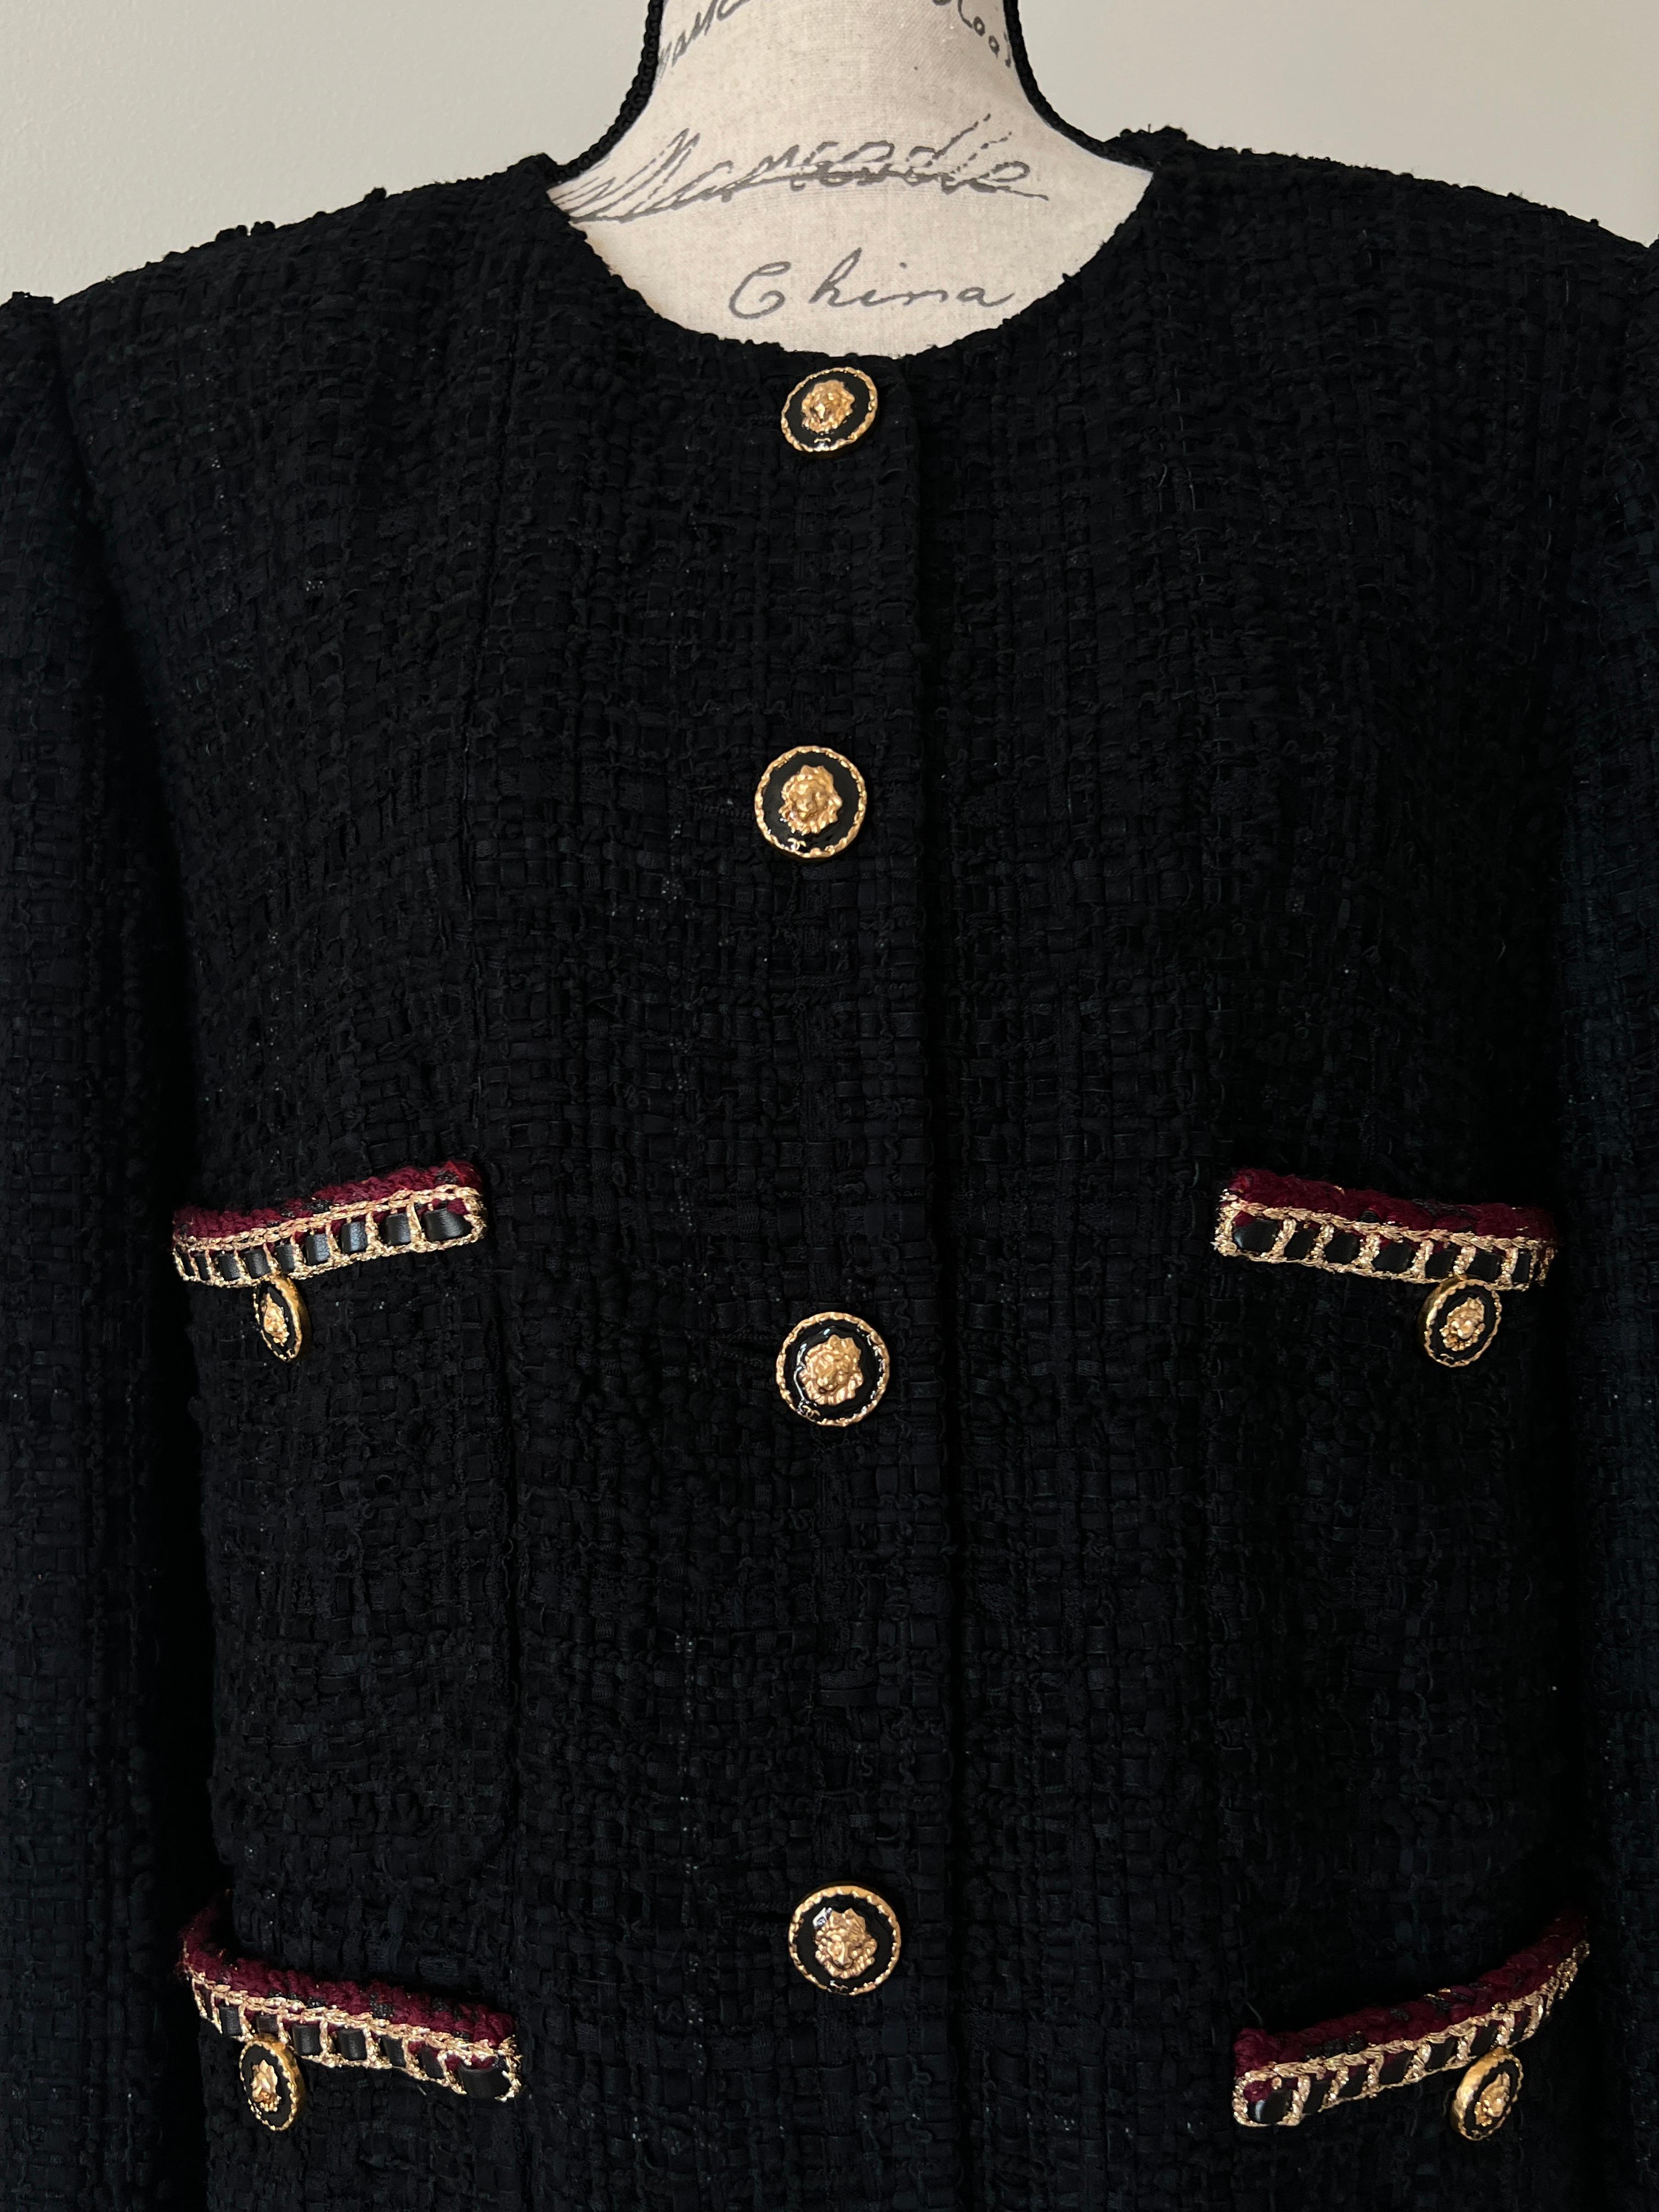 Chanel 2021 Hailey Bieber Style  Trim Black Tweed Jacket 1